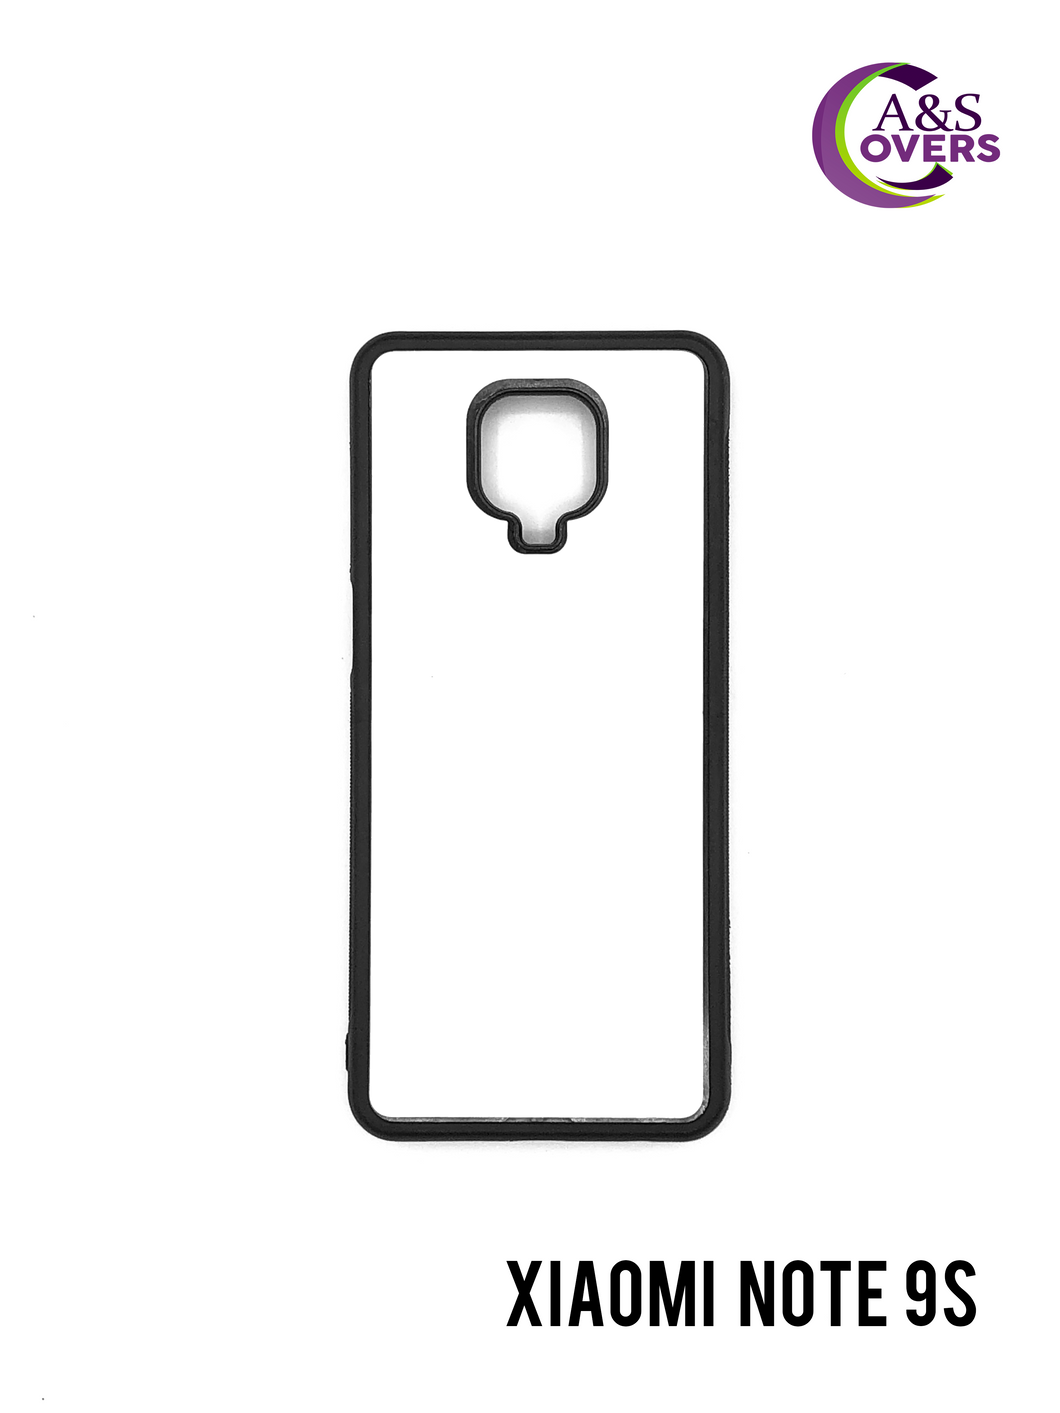 Xiaomi Note 9s Grip Case - A&S Covers